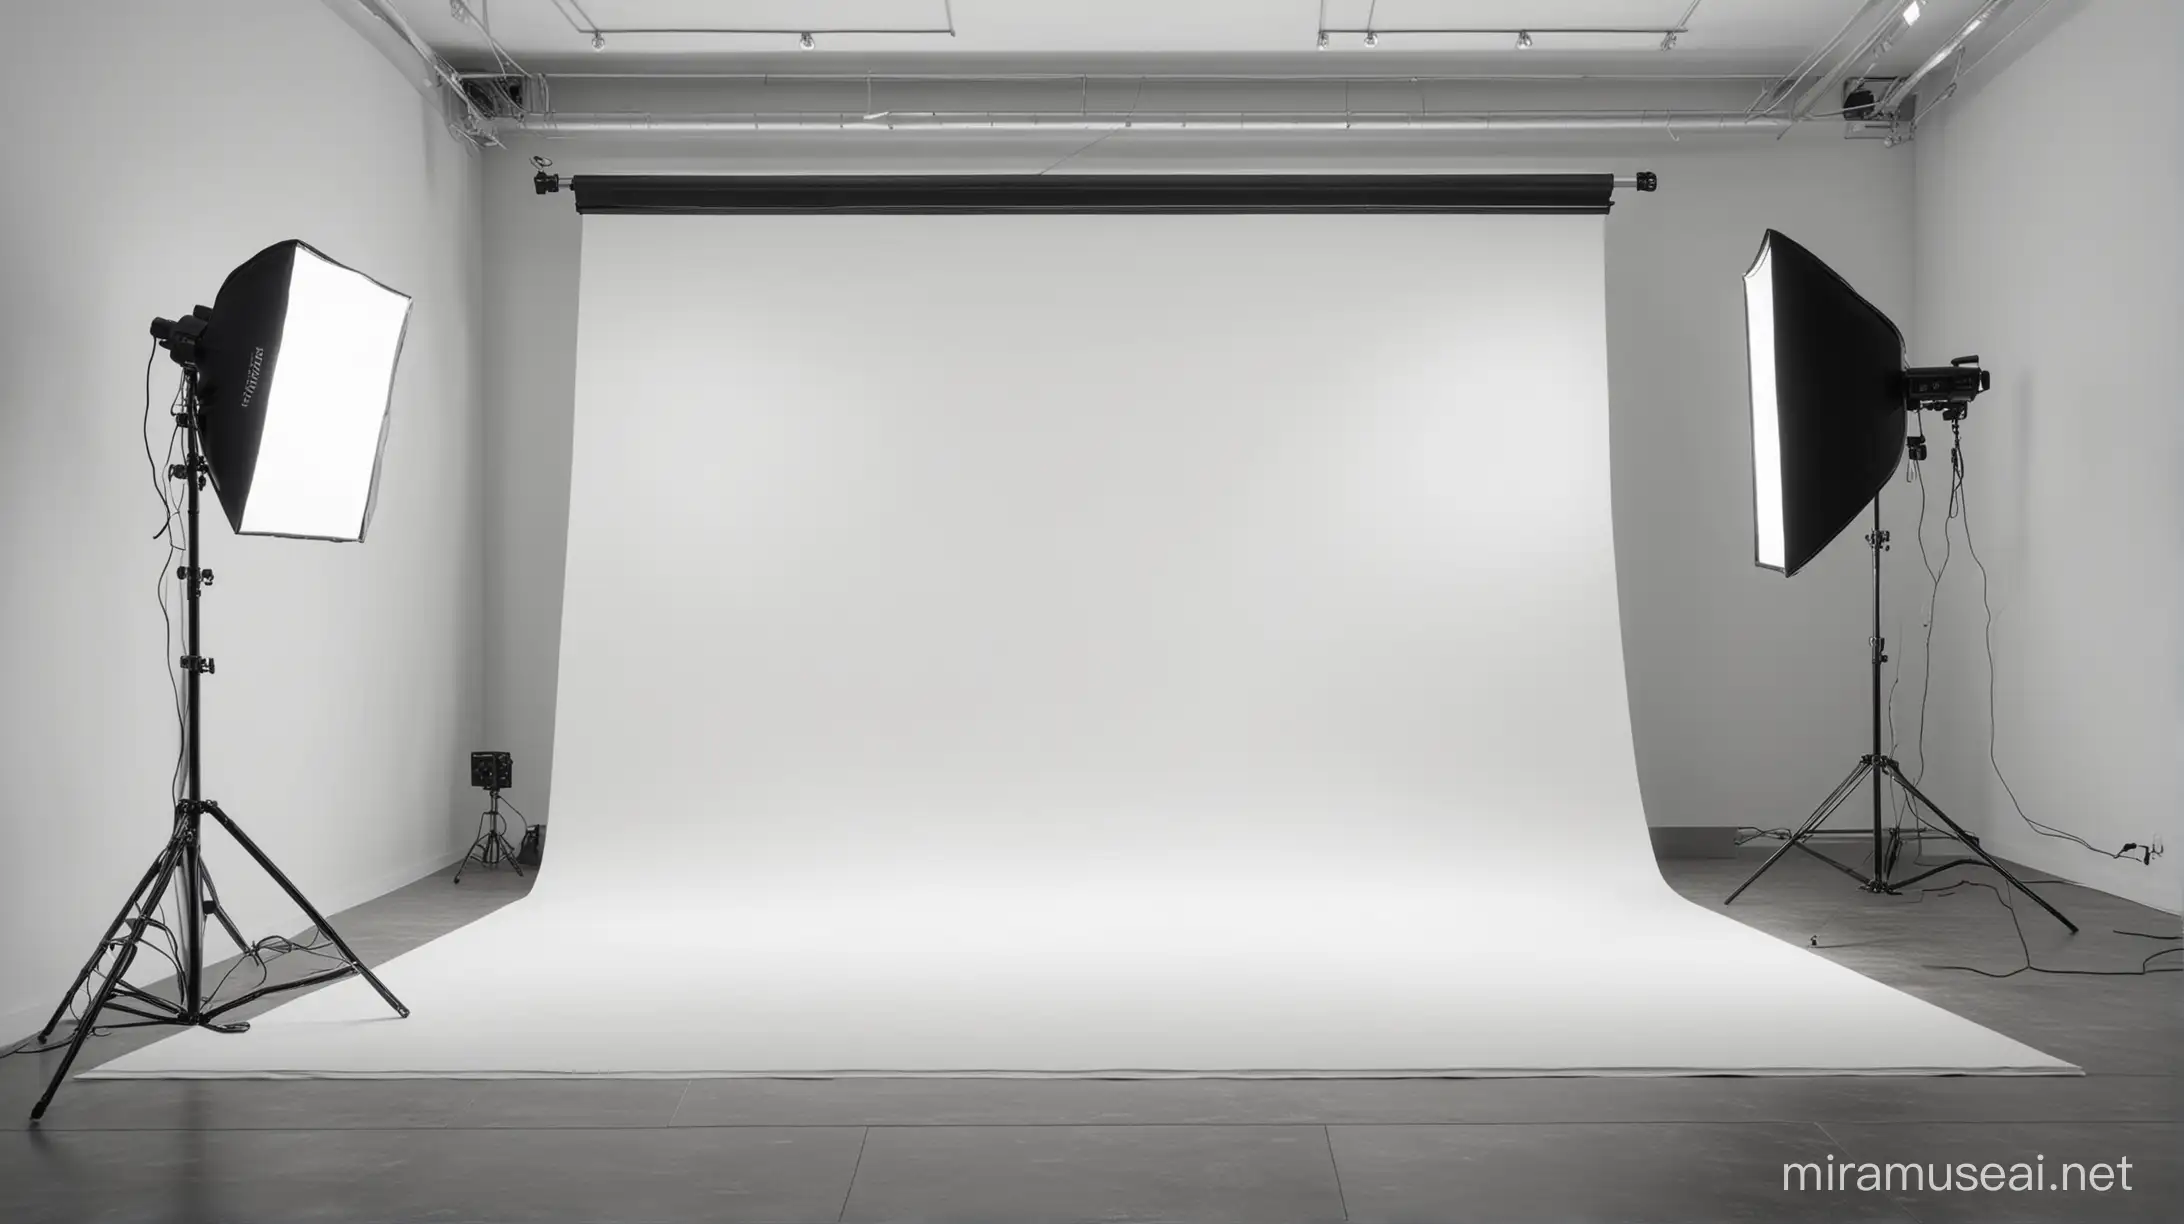 Modern Professional Photography Studio with StateoftheArt Lighting